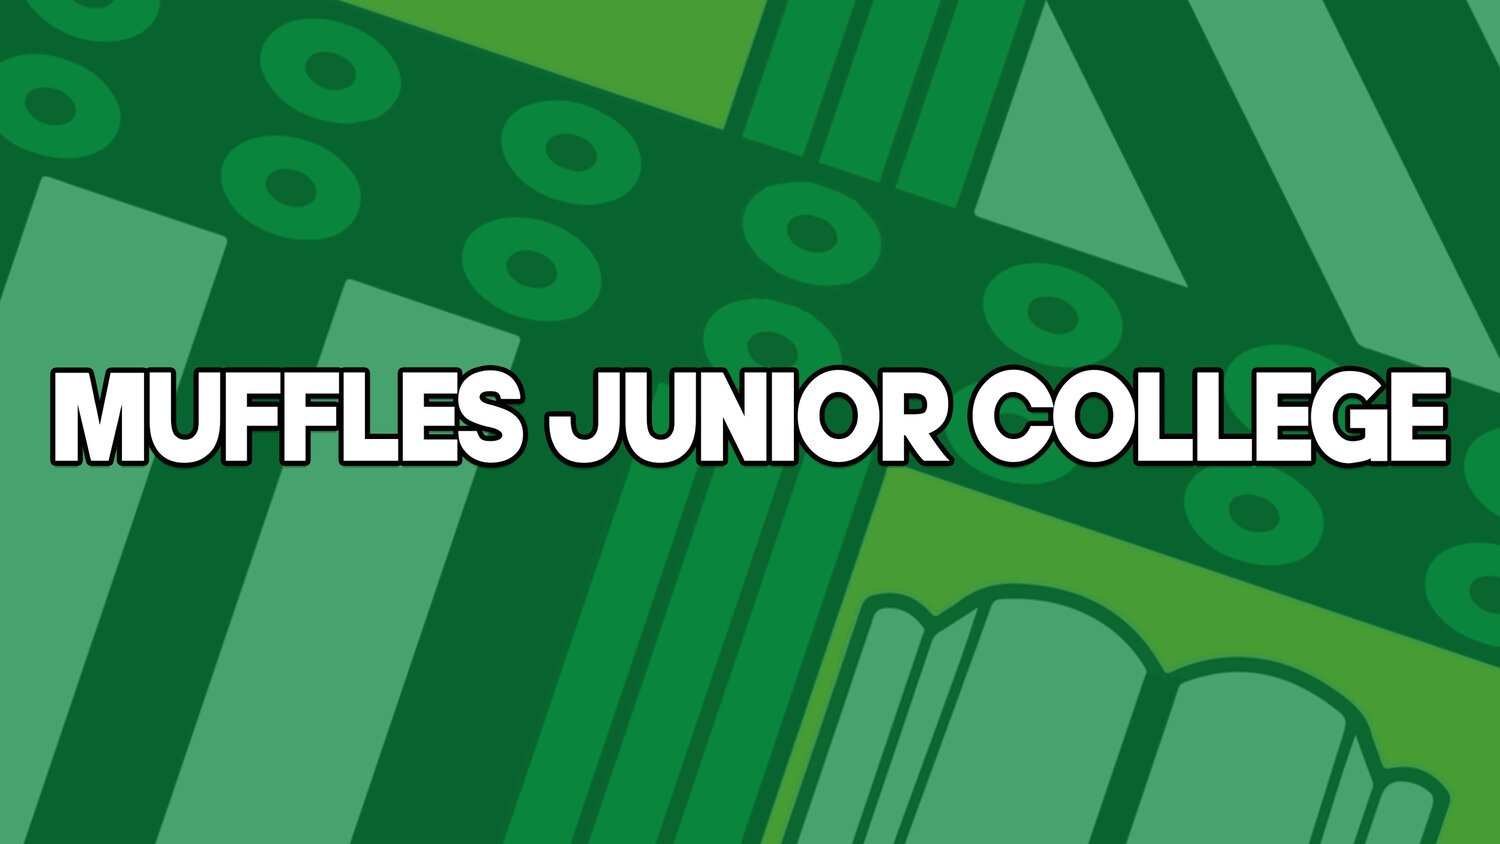 Muffles+Junior+College+Green.jpg